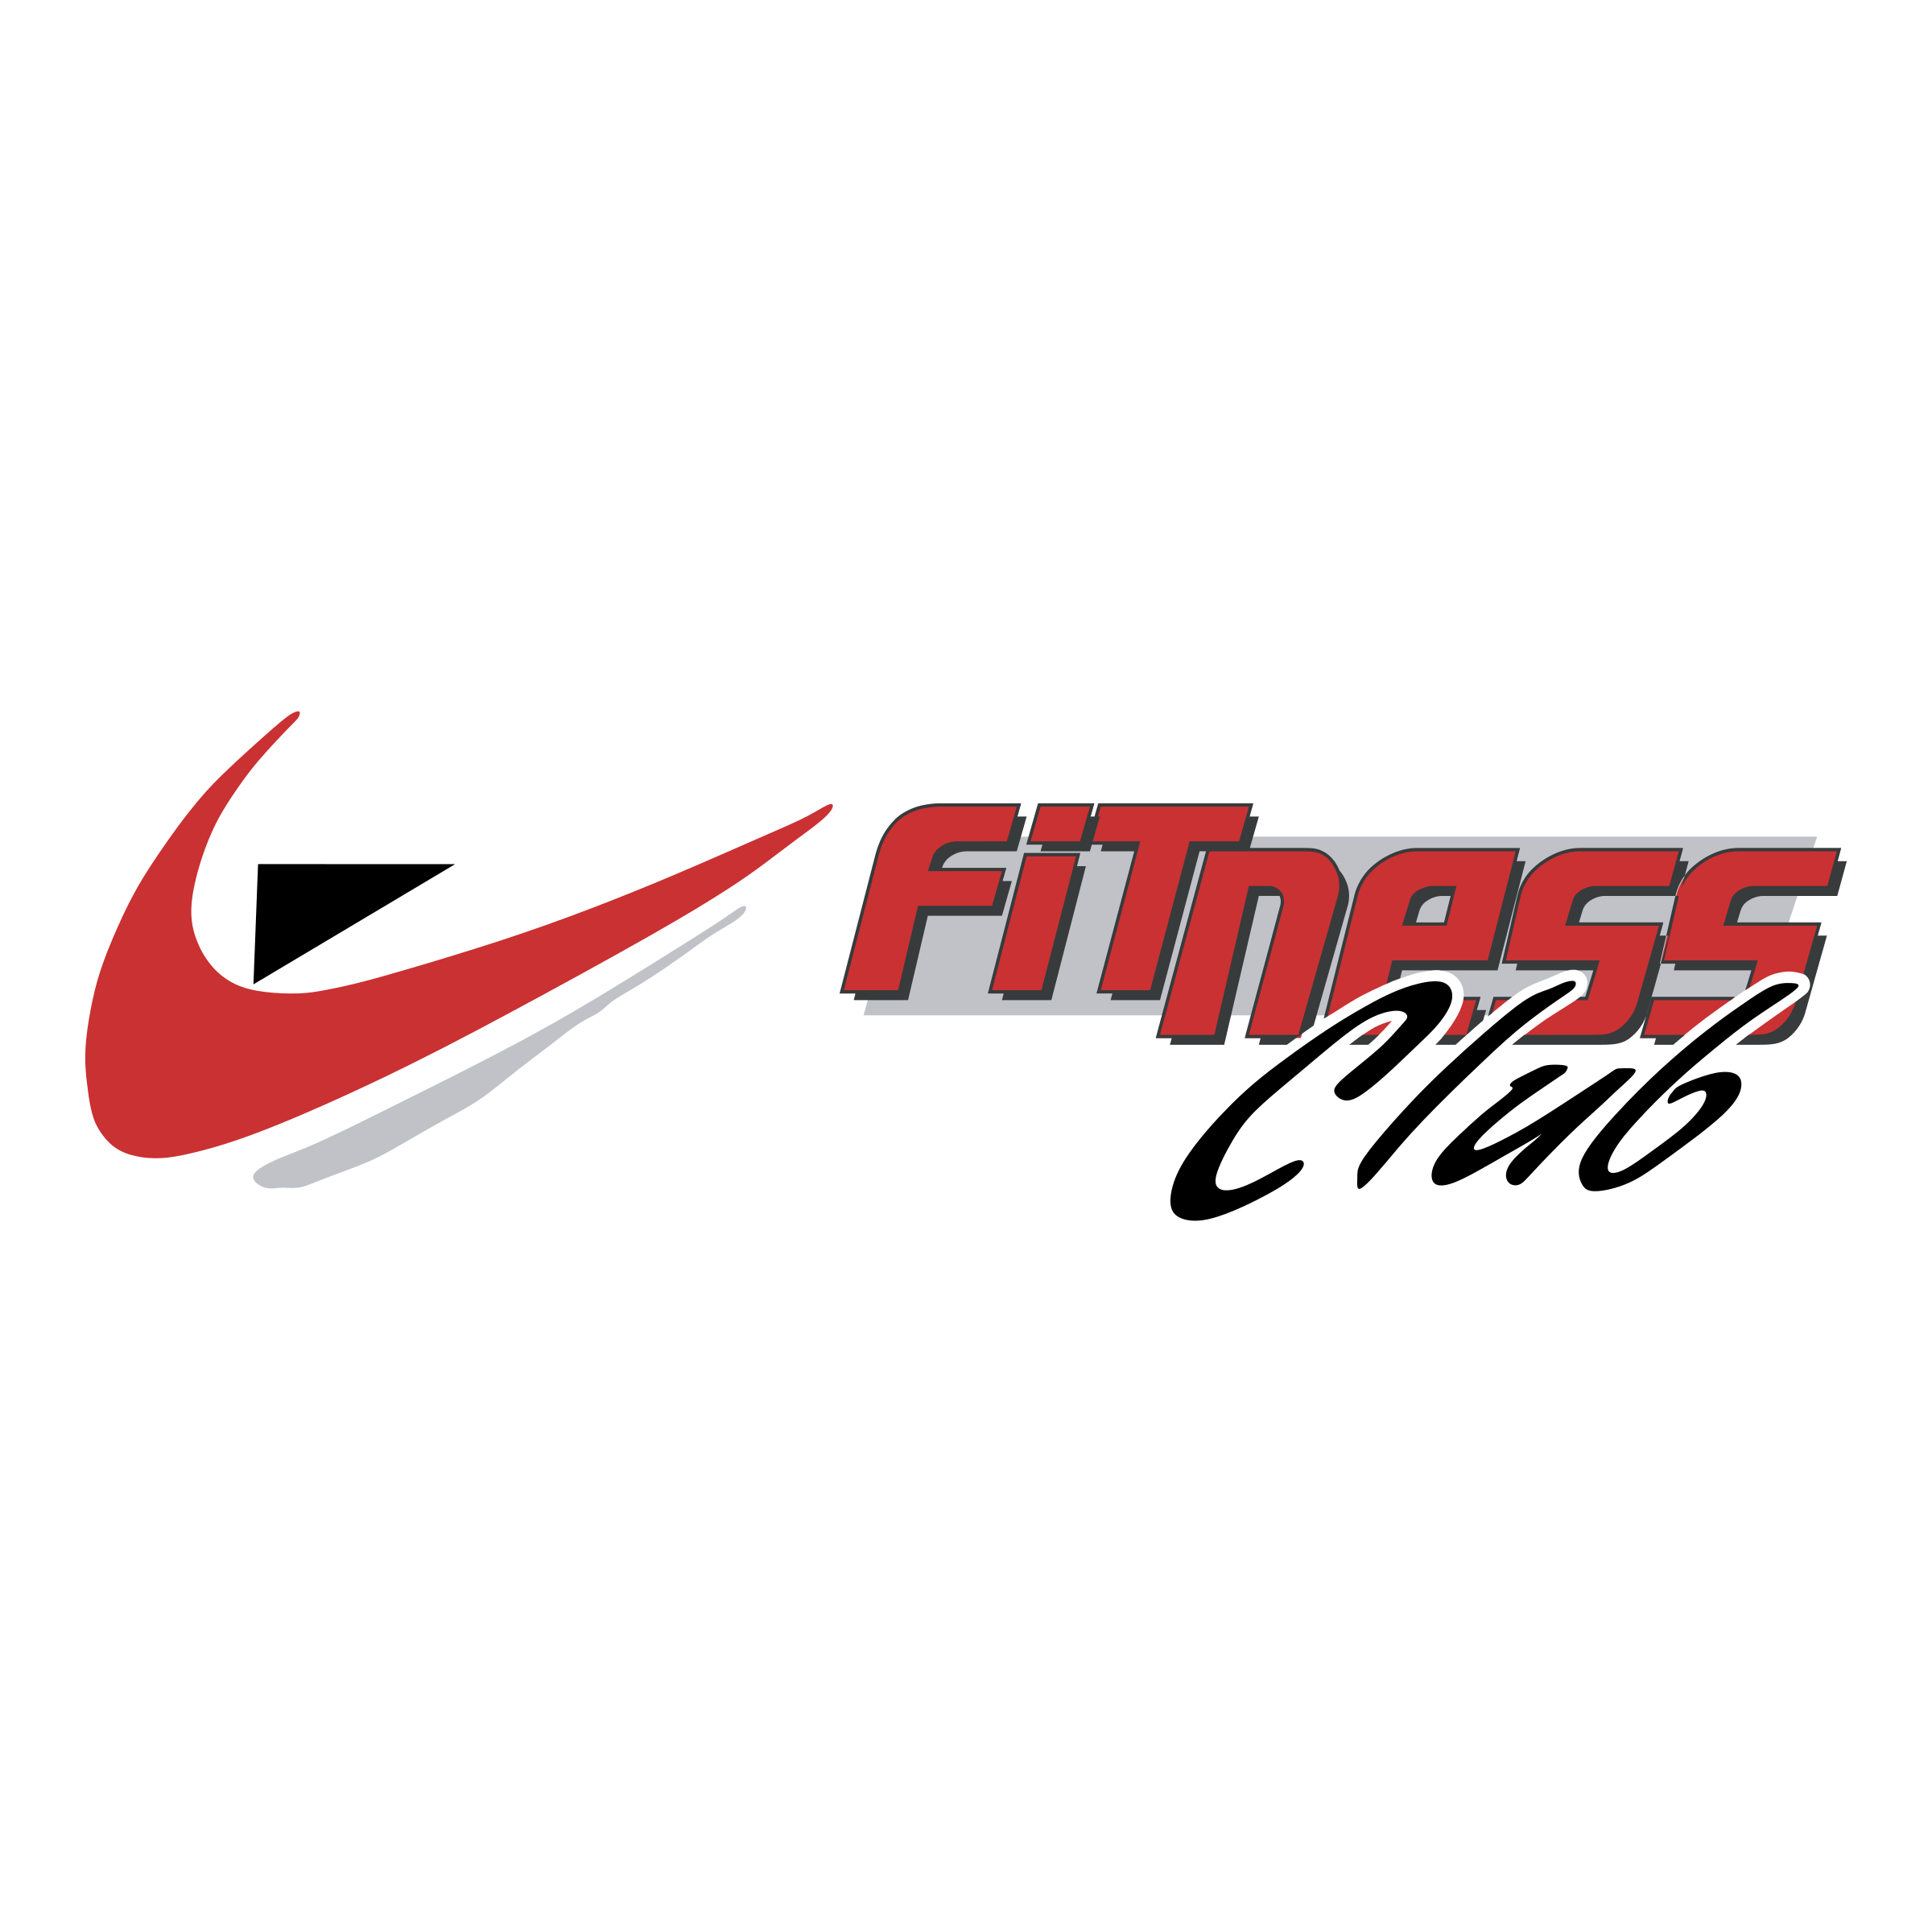 Fitness Club Logo - Fitness Club Logo PNG Transparent & SVG Vector - Freebie Supply